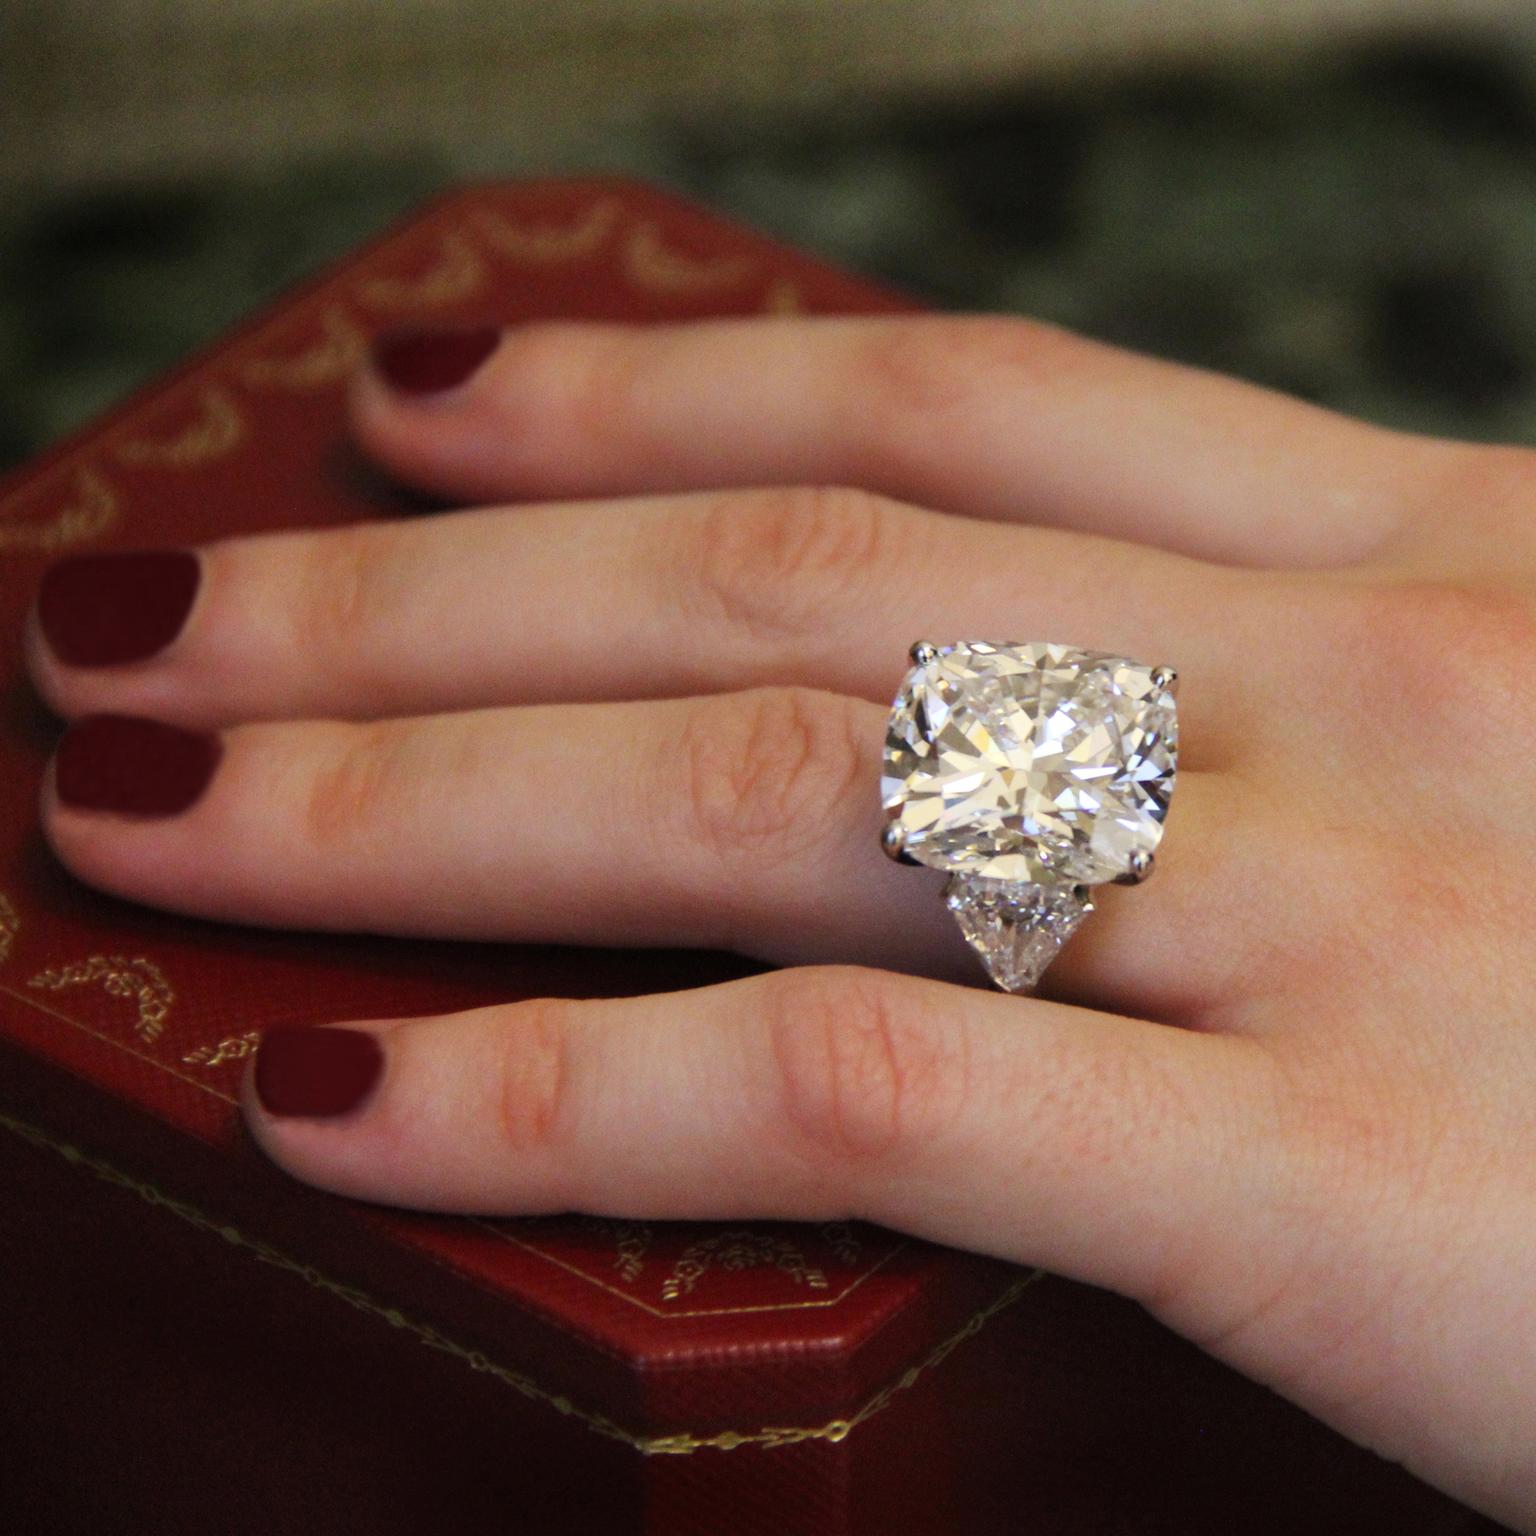 Cartier 20.30-carat cushion-cut diamond ring